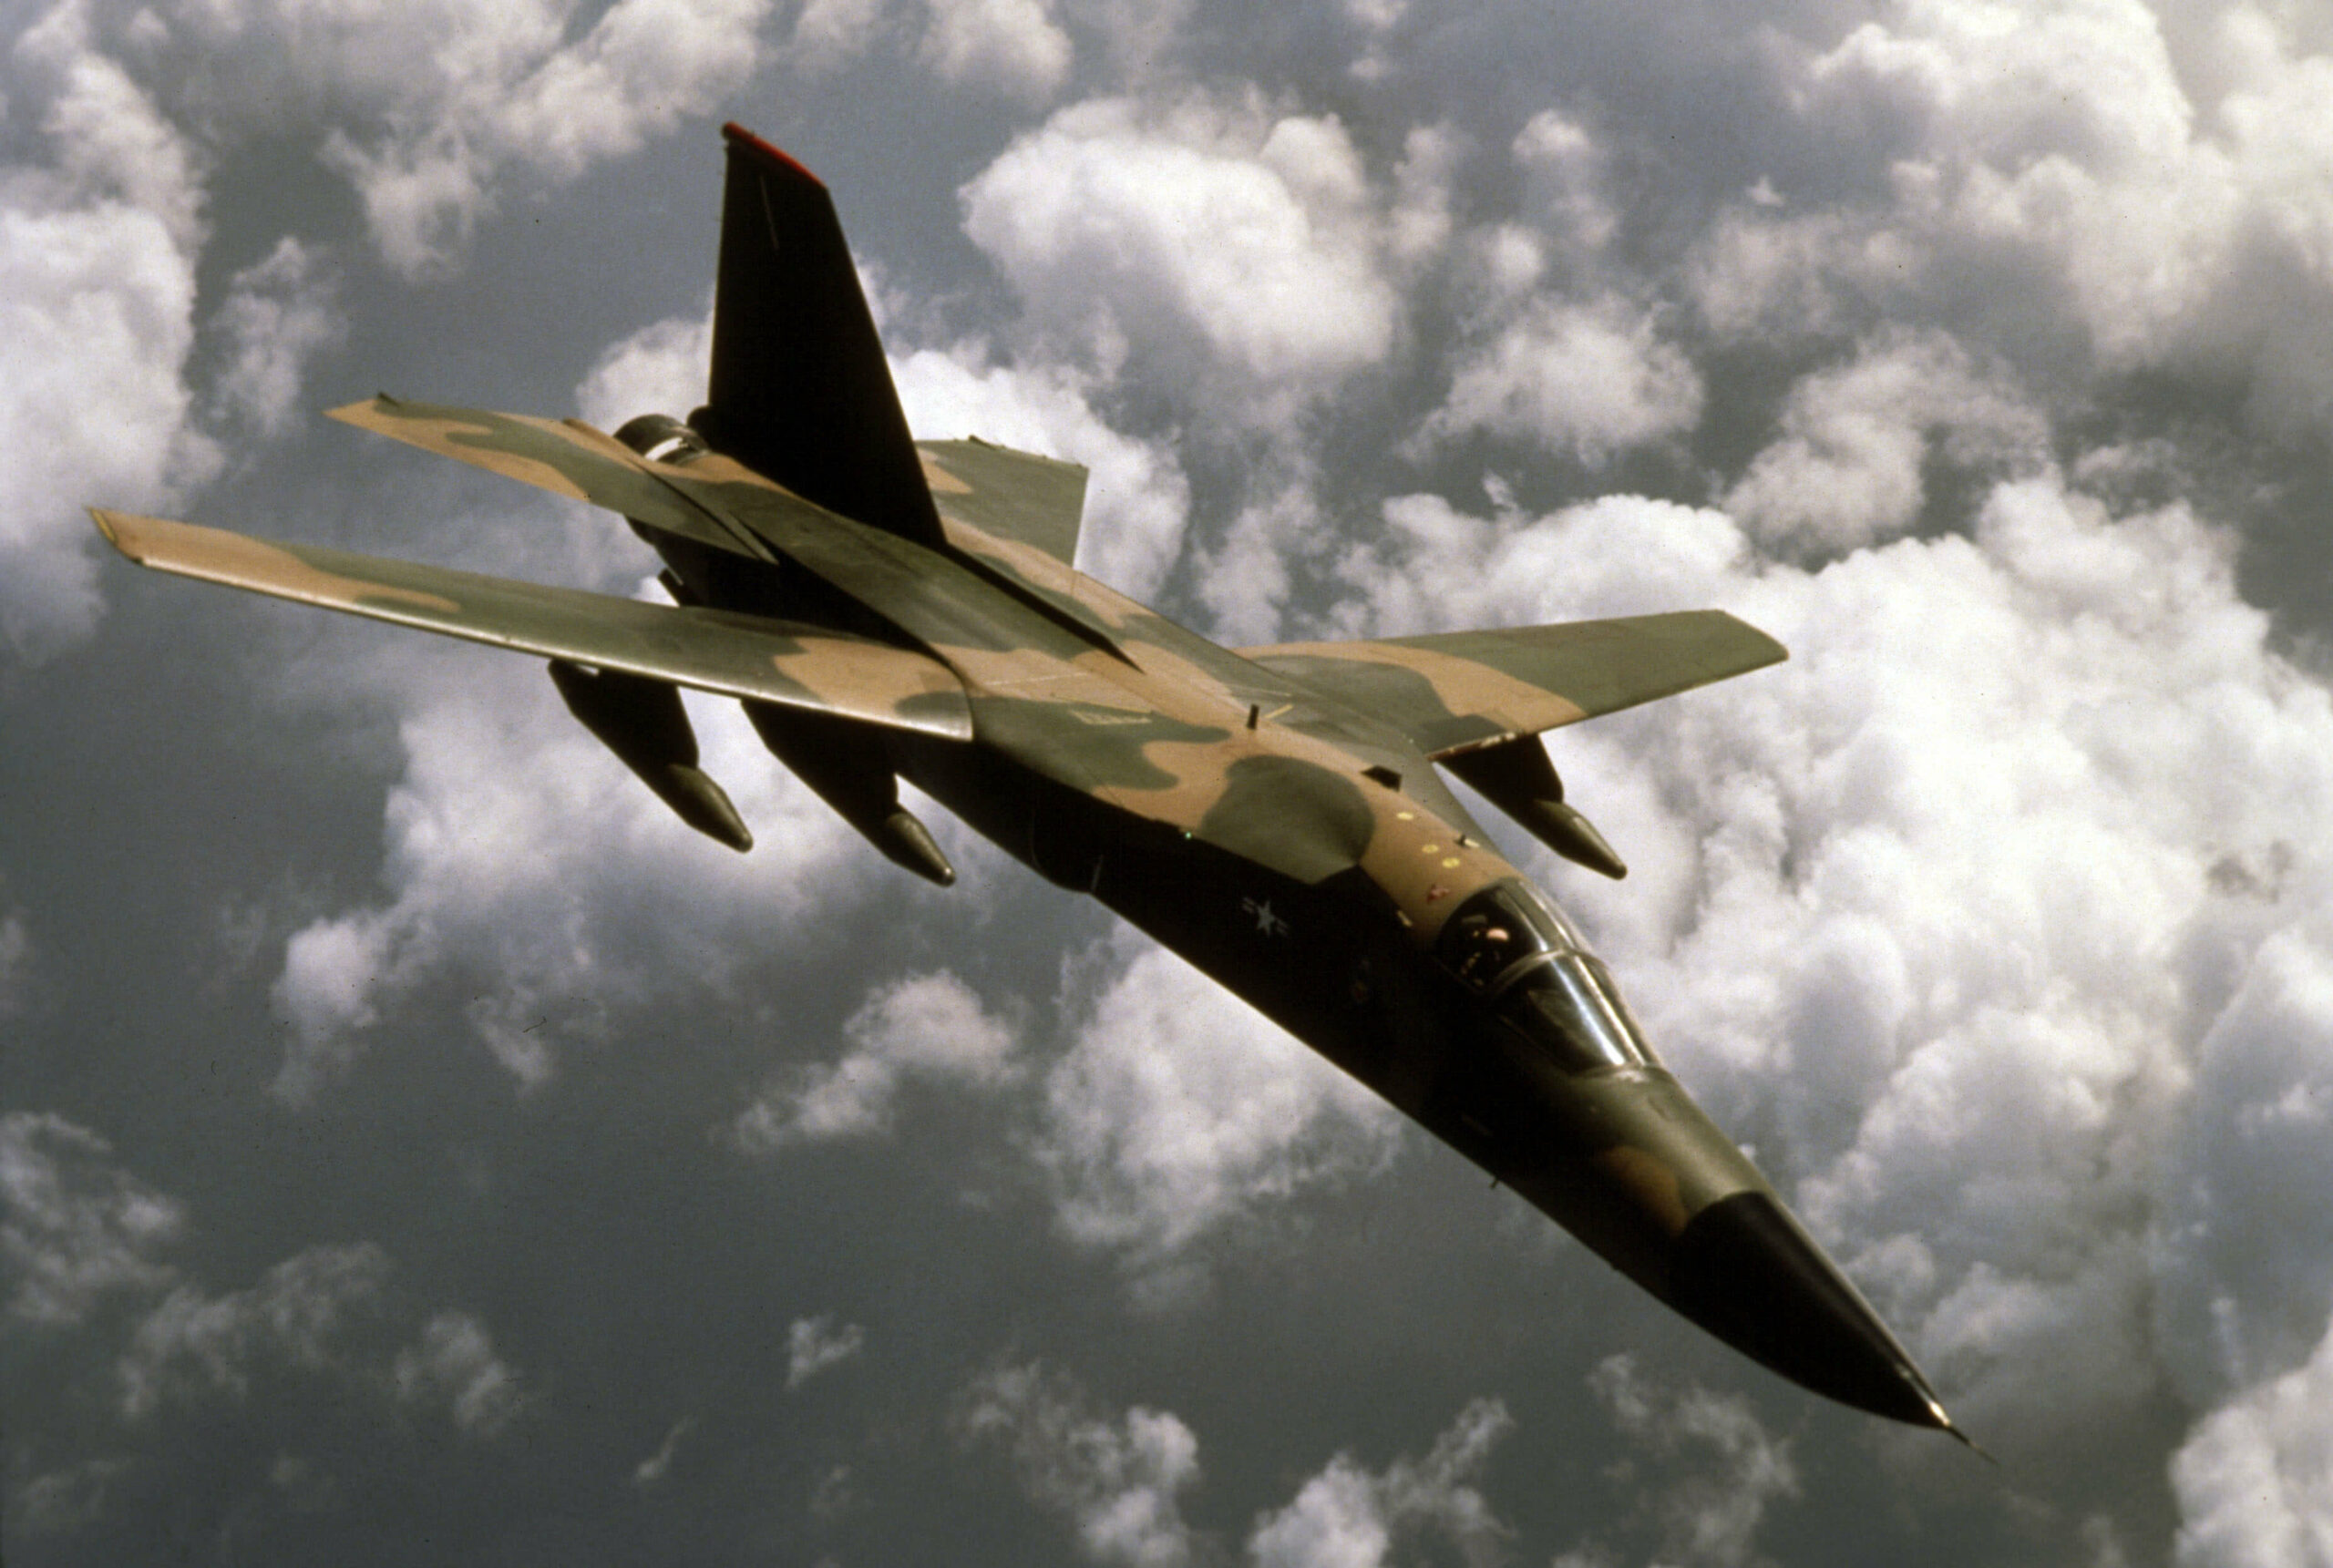 General Dynamics F-111 Aardvark - Fastest Plane in the World (Top Speed)